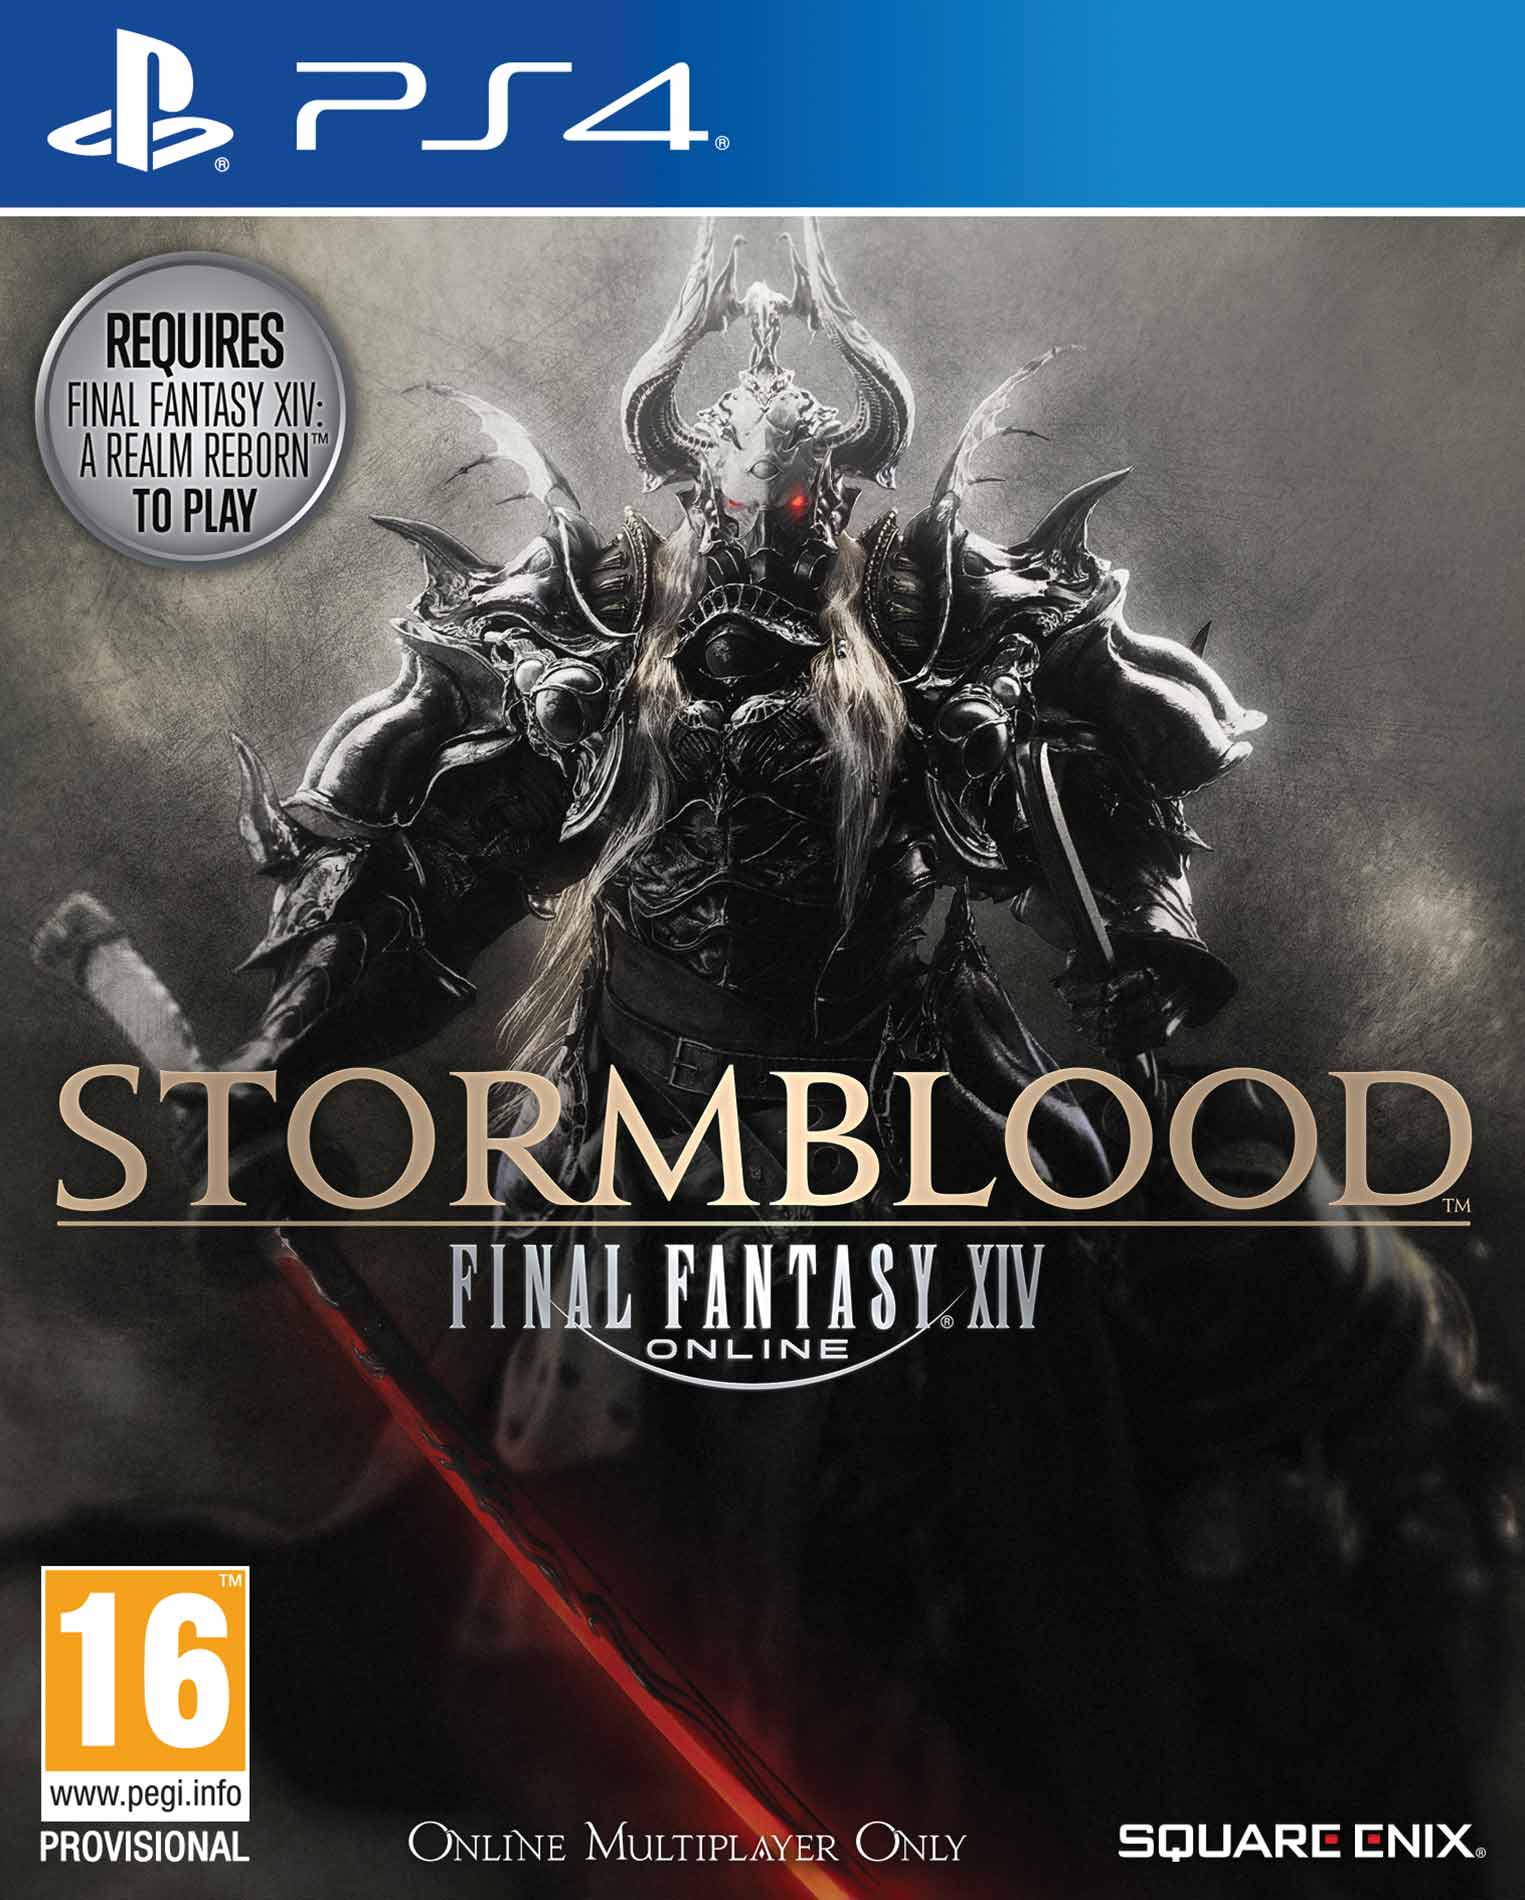 Final Fantasy XIV Online Stormblood